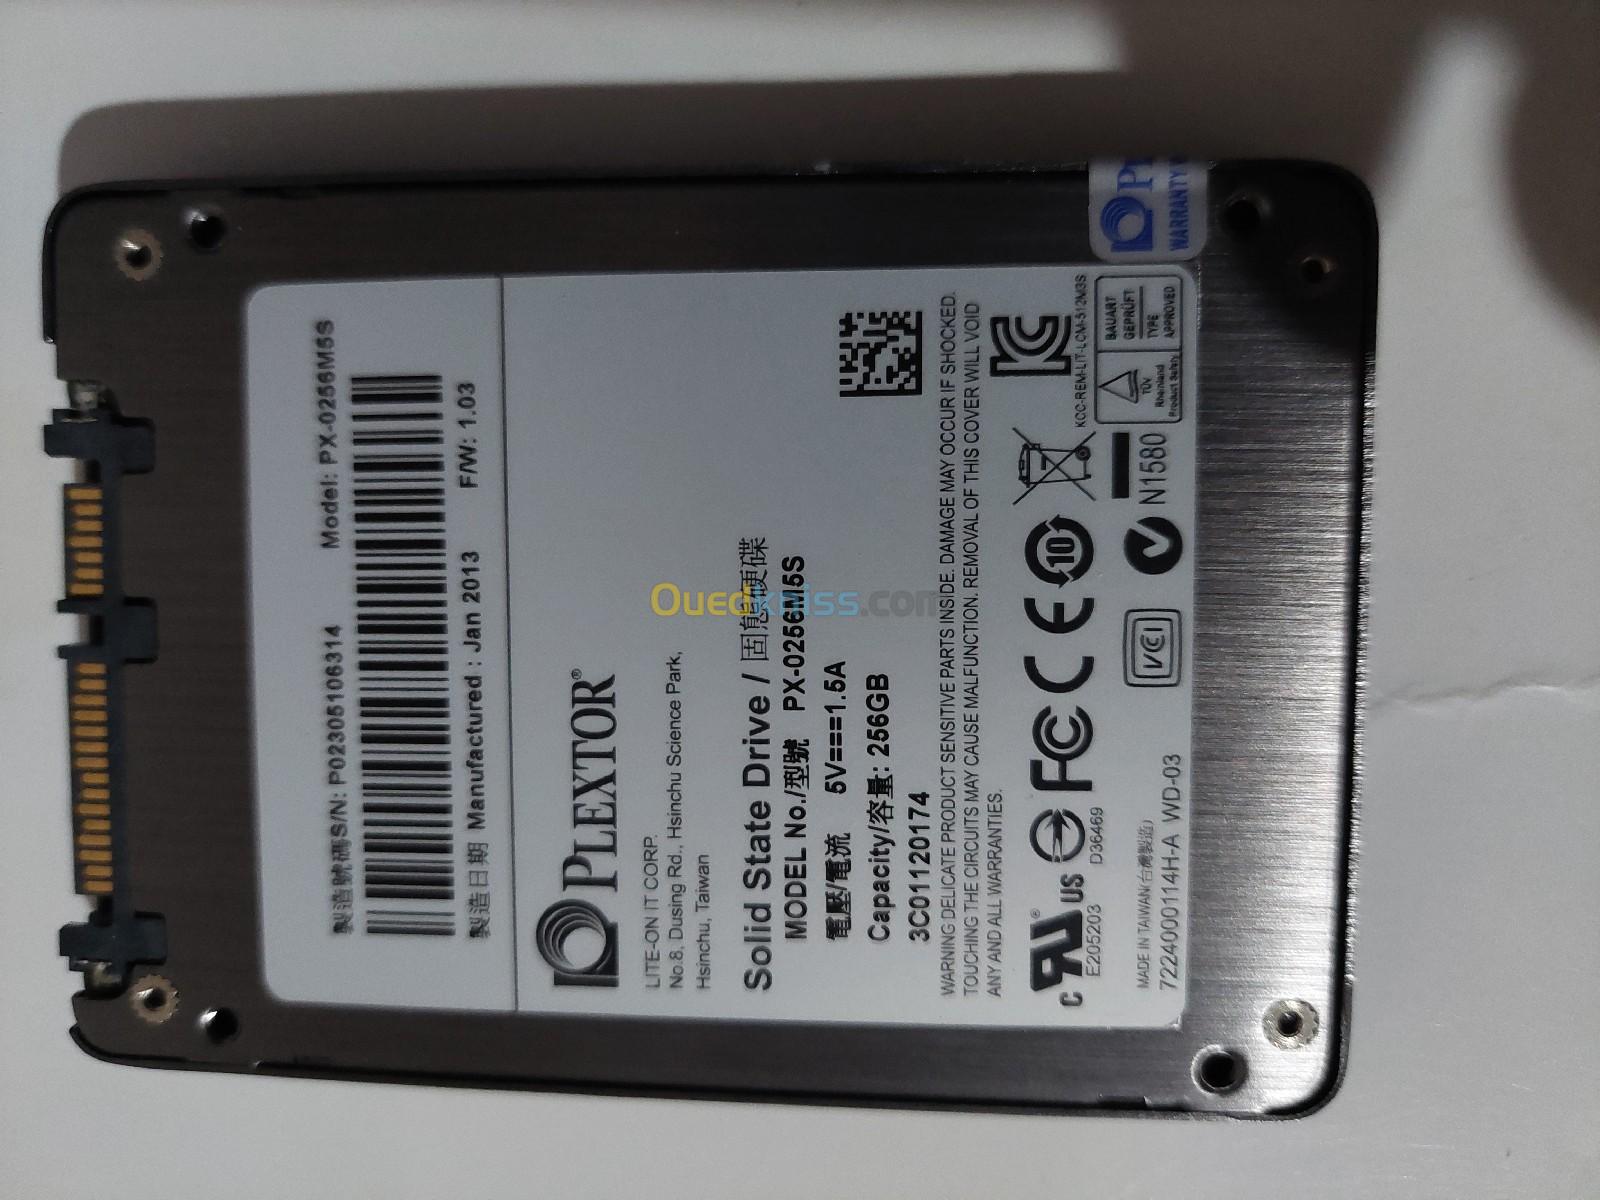 SAMSUNG SSD 850 EVO 250GB